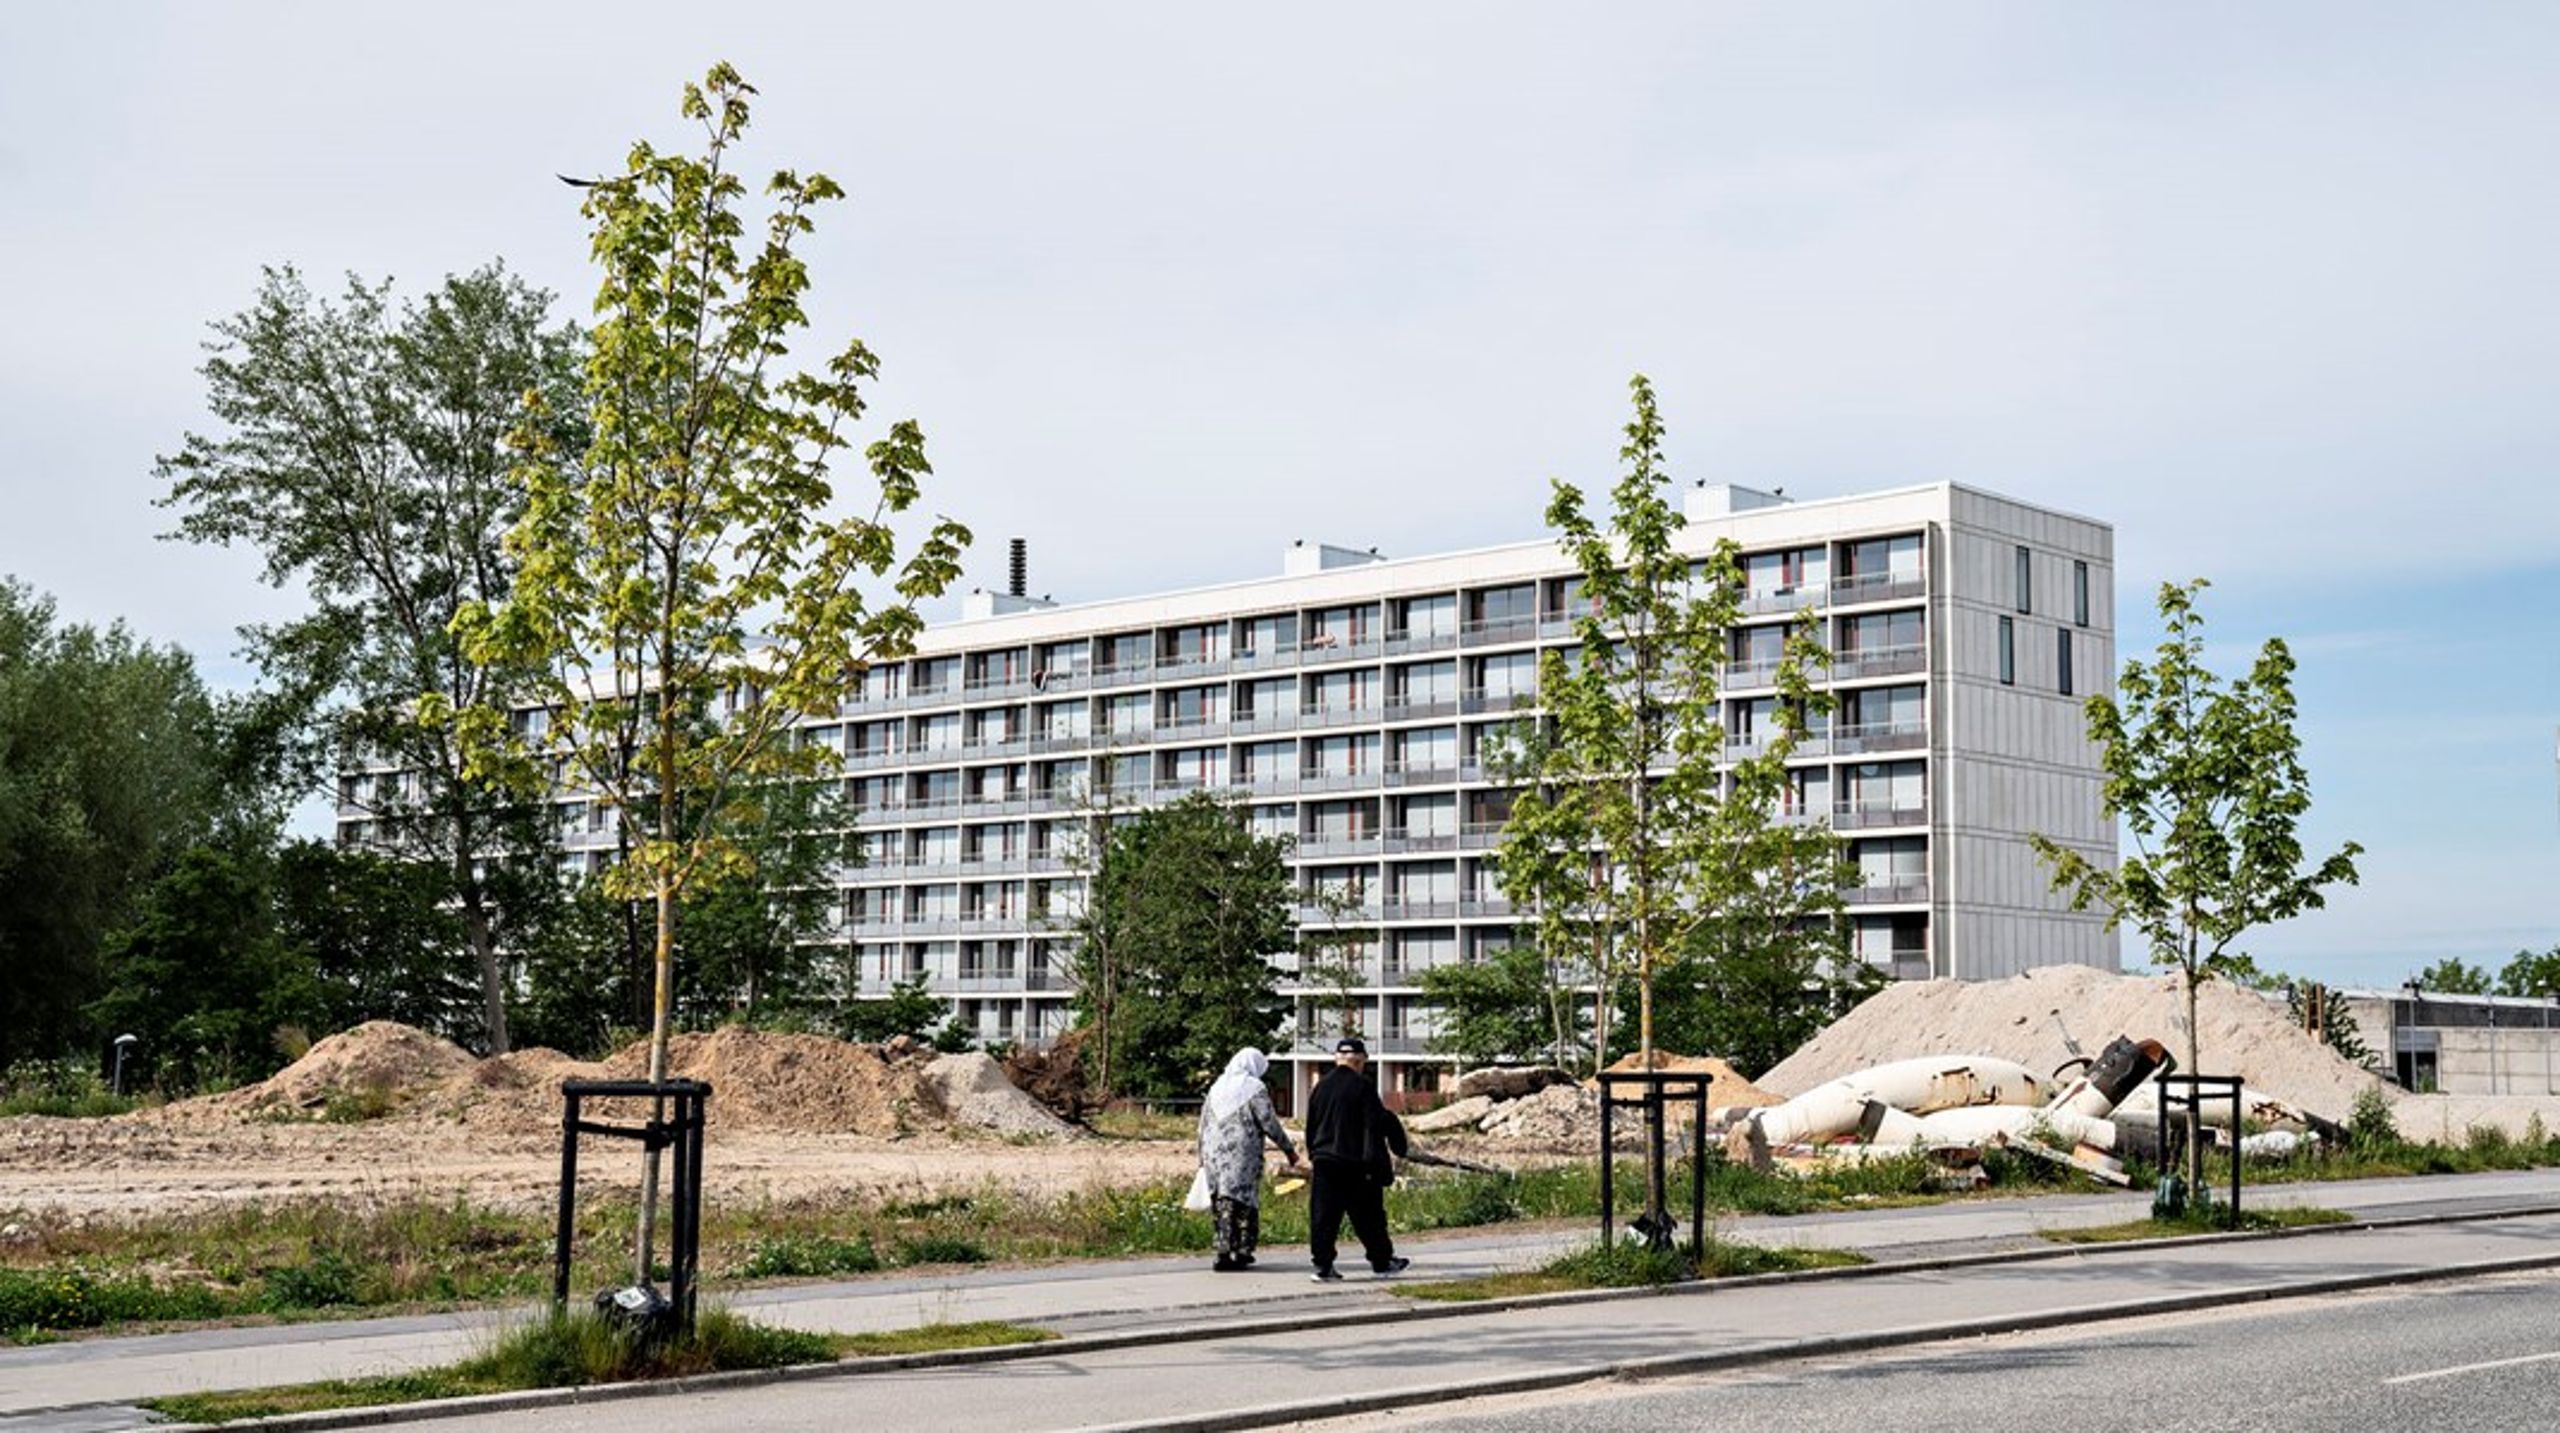 Gellerupparken i Aarhus Kommune er fortsat på listen over udsatte boligområder.